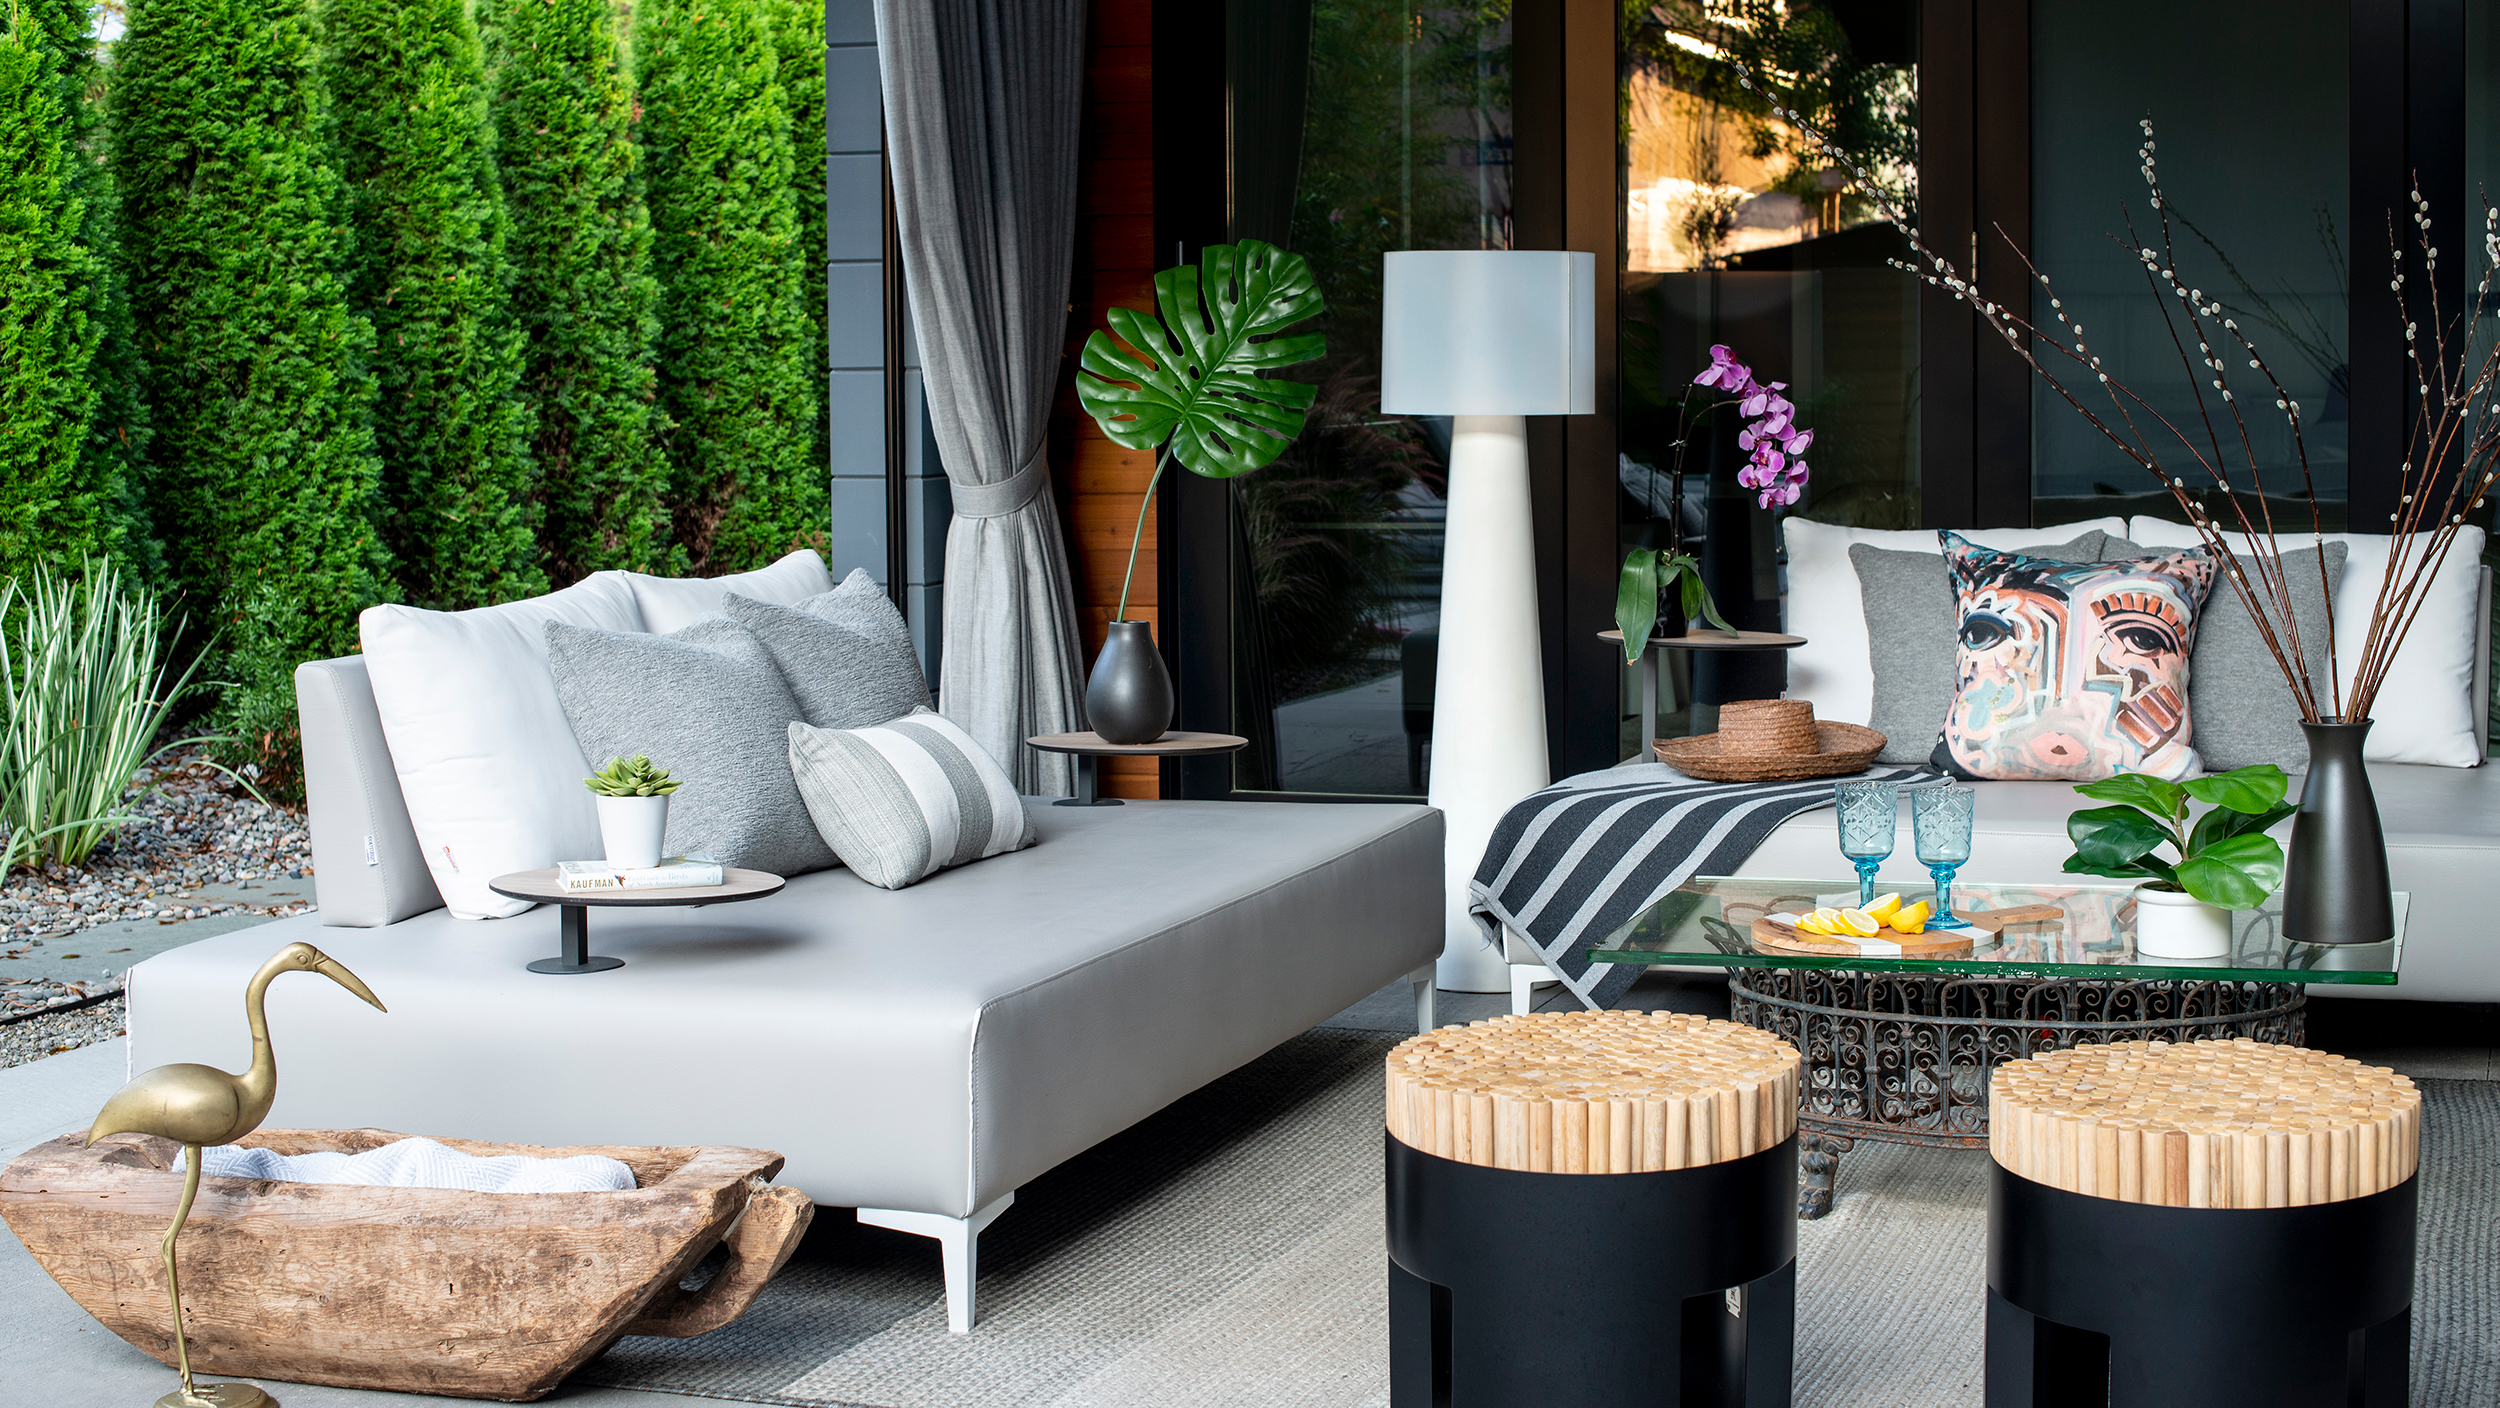 Friluftsliv Norwegian interior design trend brings open air living ...